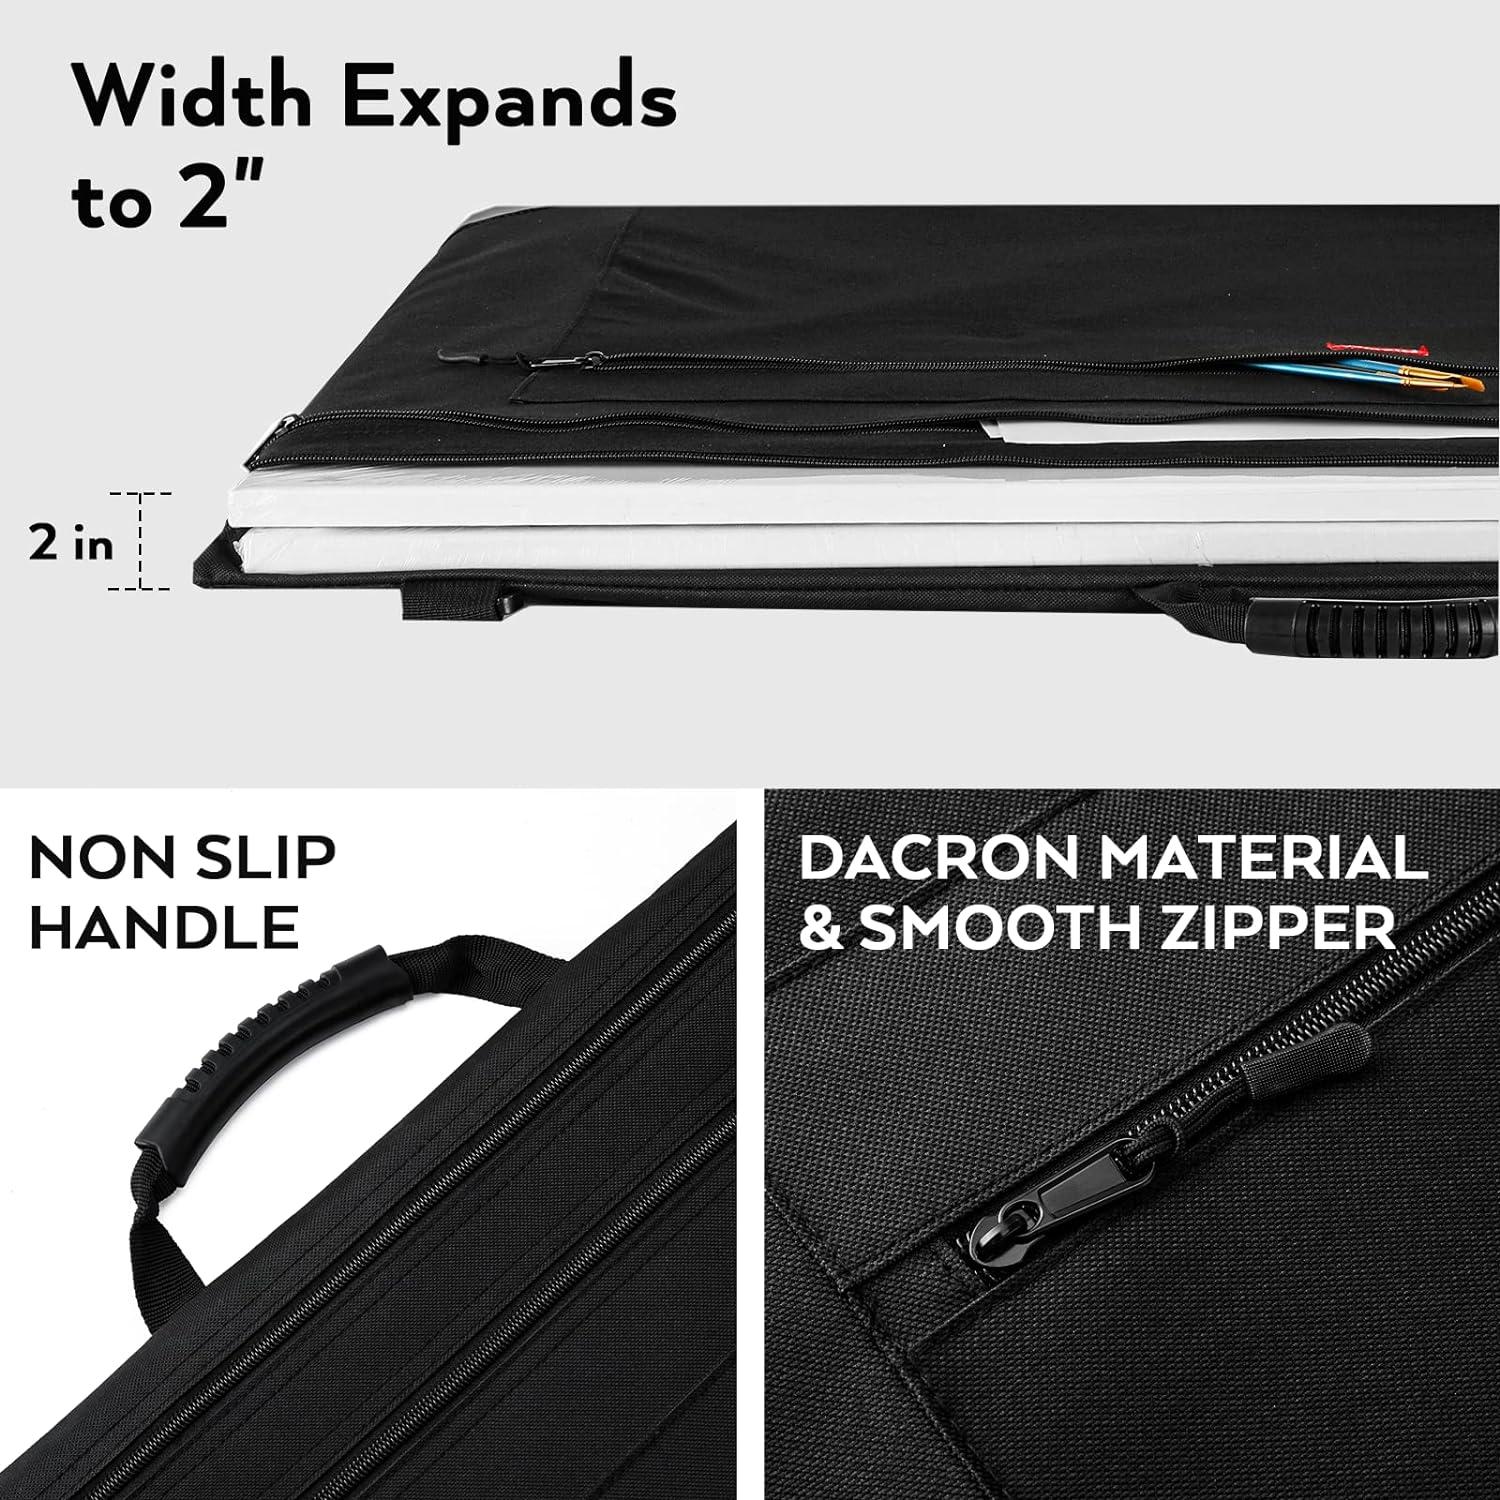 Nicpro Light Weight Art Portfolio Bag, 23x31 Black Art Canvas Portfolio  Case with Detachable Shoulder Strap, Leather Corners, Carrying Storage Case